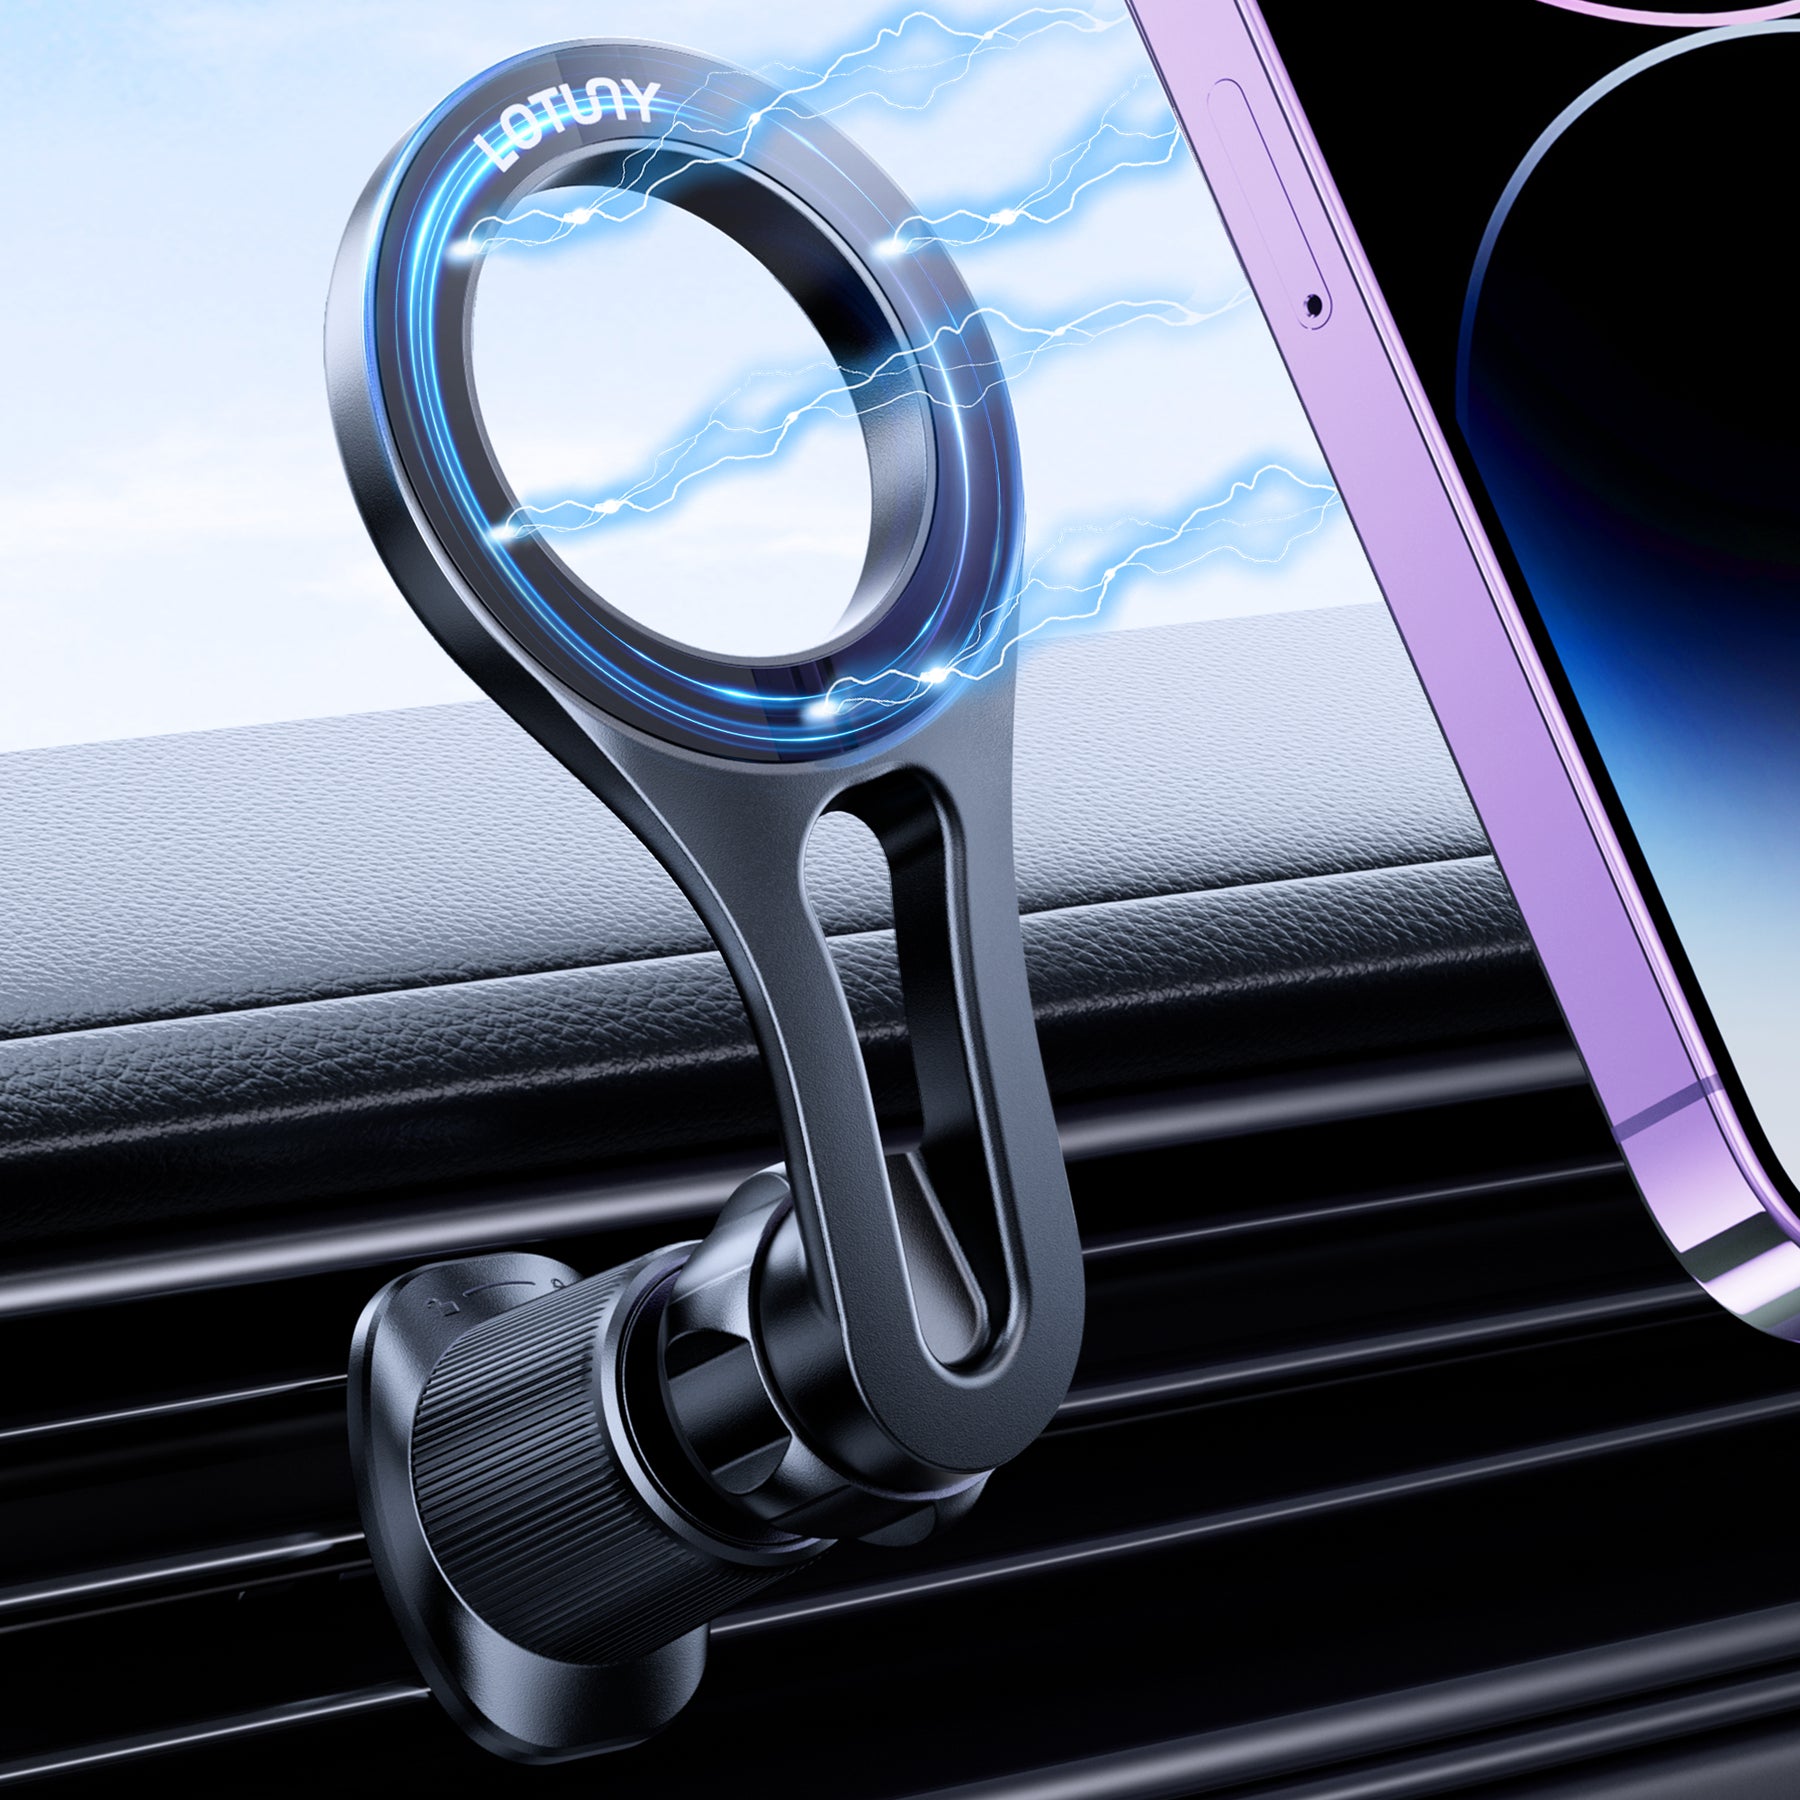 TOPK Car Phone Holder, Magnetic Phone Car Mount, 2in1 Phone Holder